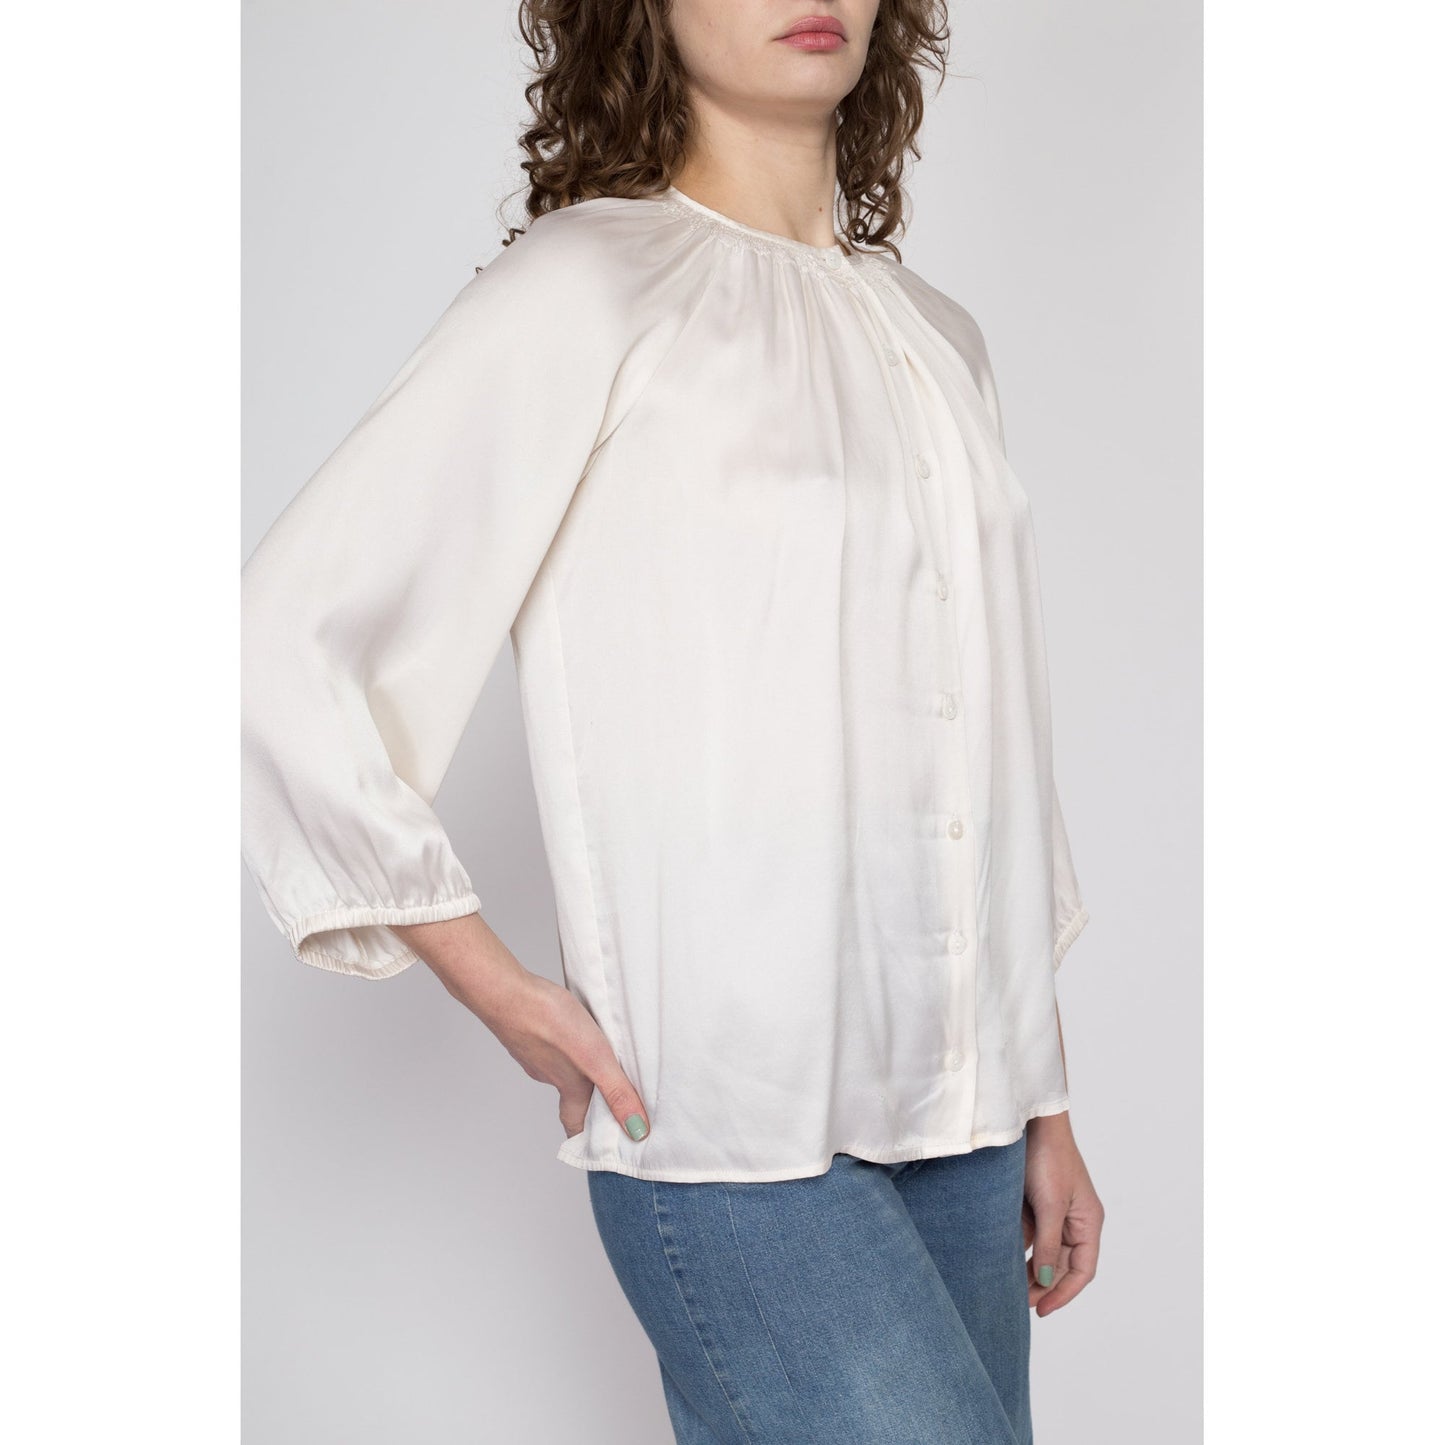 Medium 90s White Silk Folk Blouse | Vintage Boho 3/4 Sleeve Pleated Hippie Peasant Top